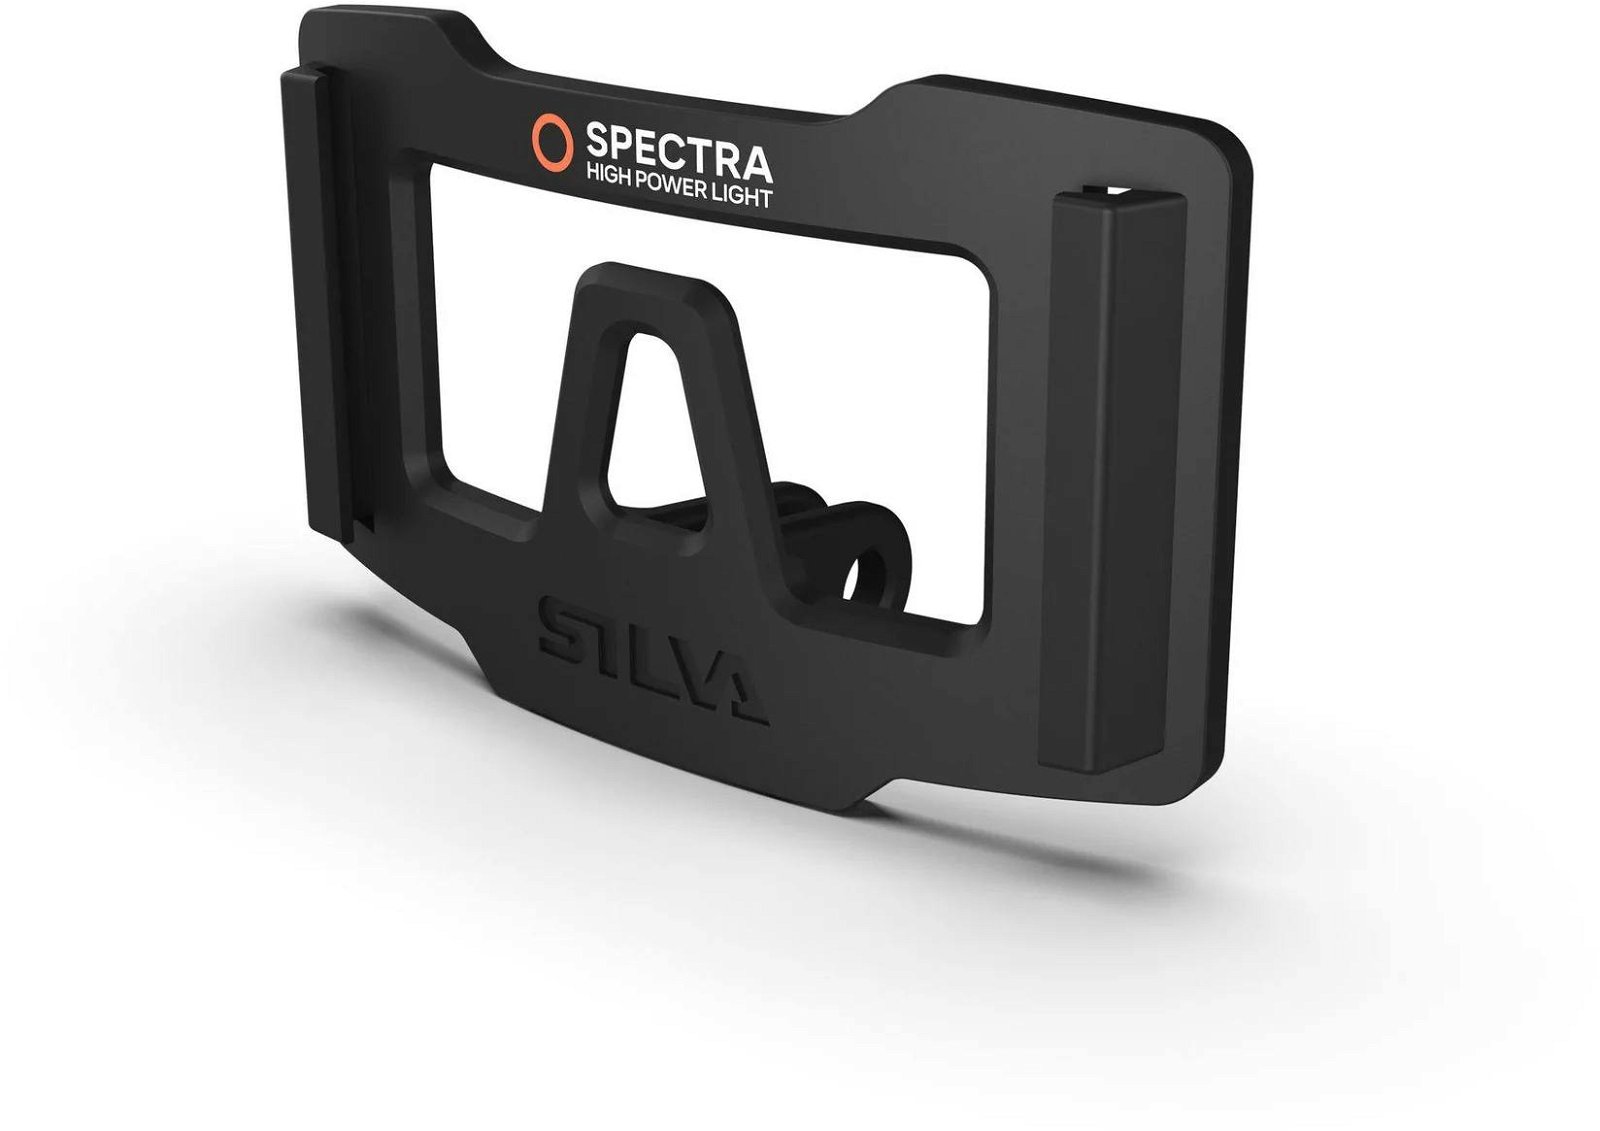 Silva Spectra Go-pro mount